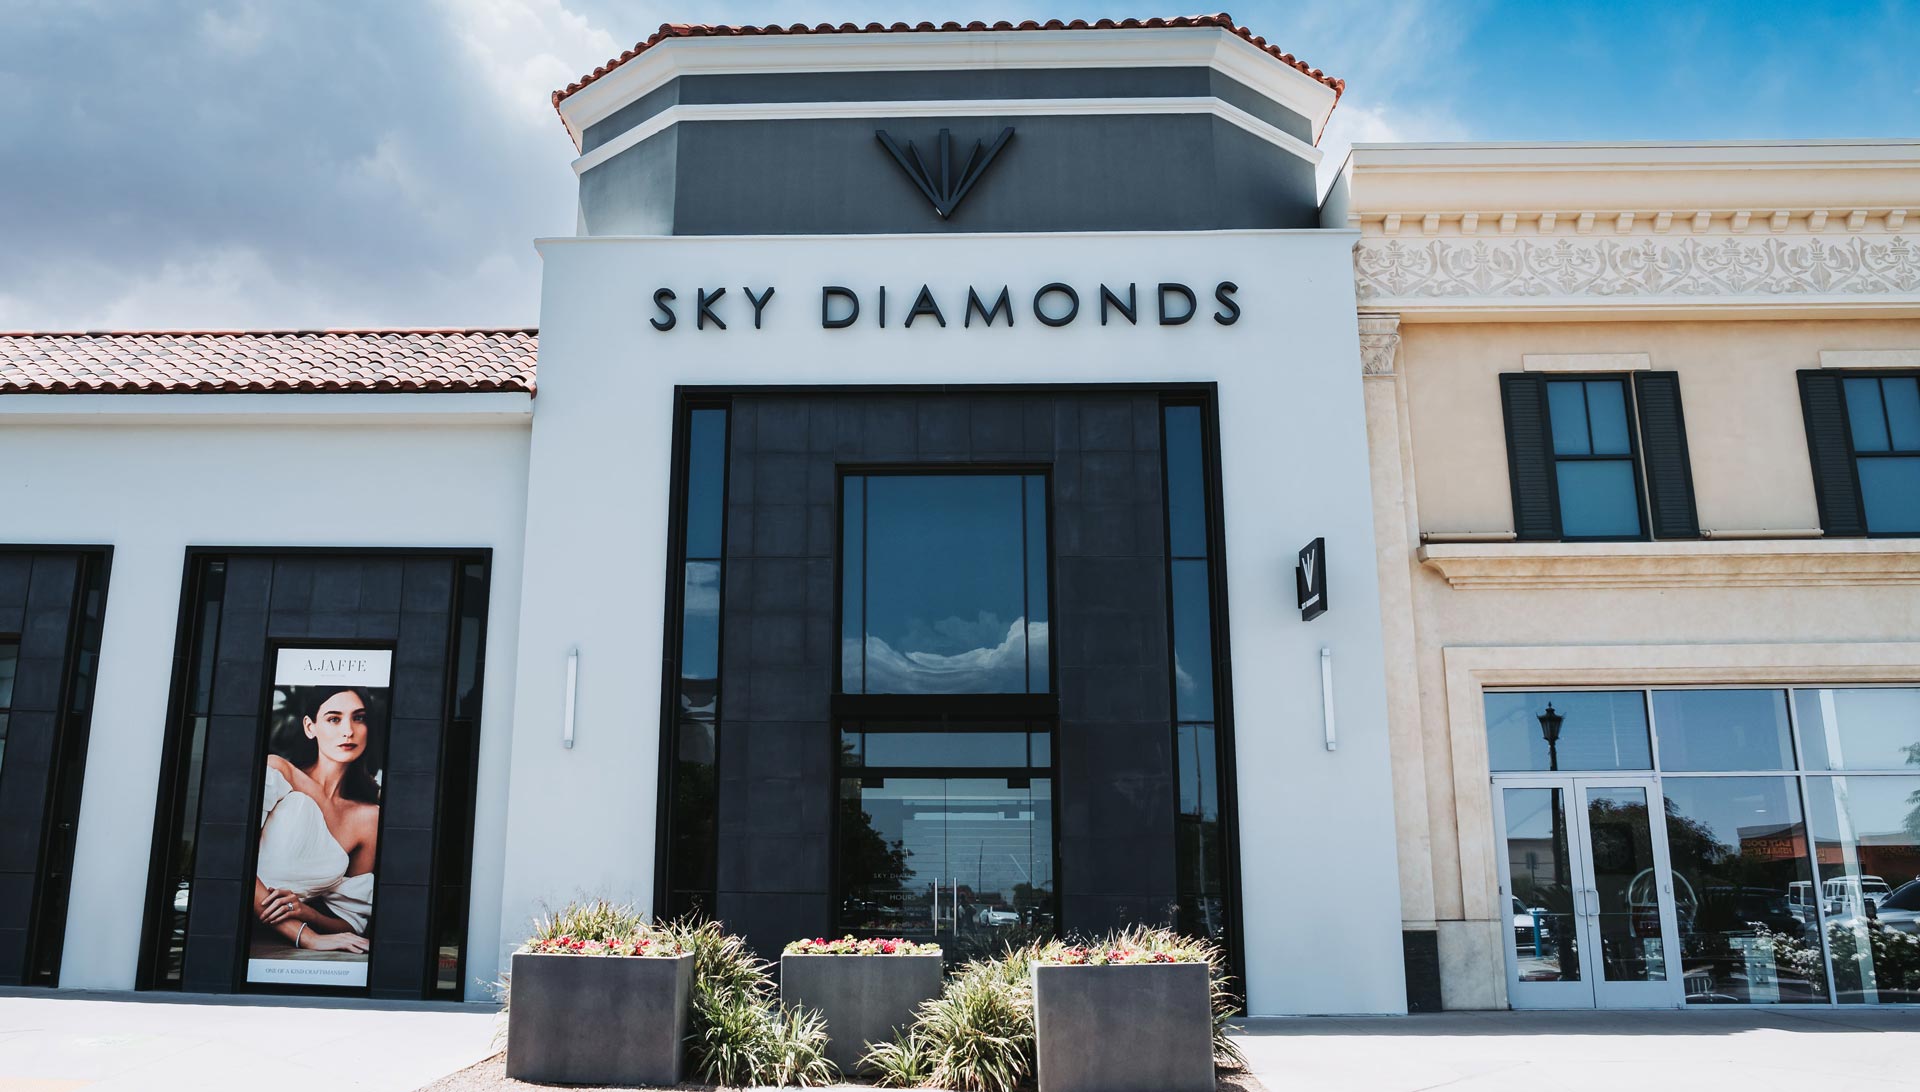 Sky Diamonds Temporarily Closed Due To Covid-19